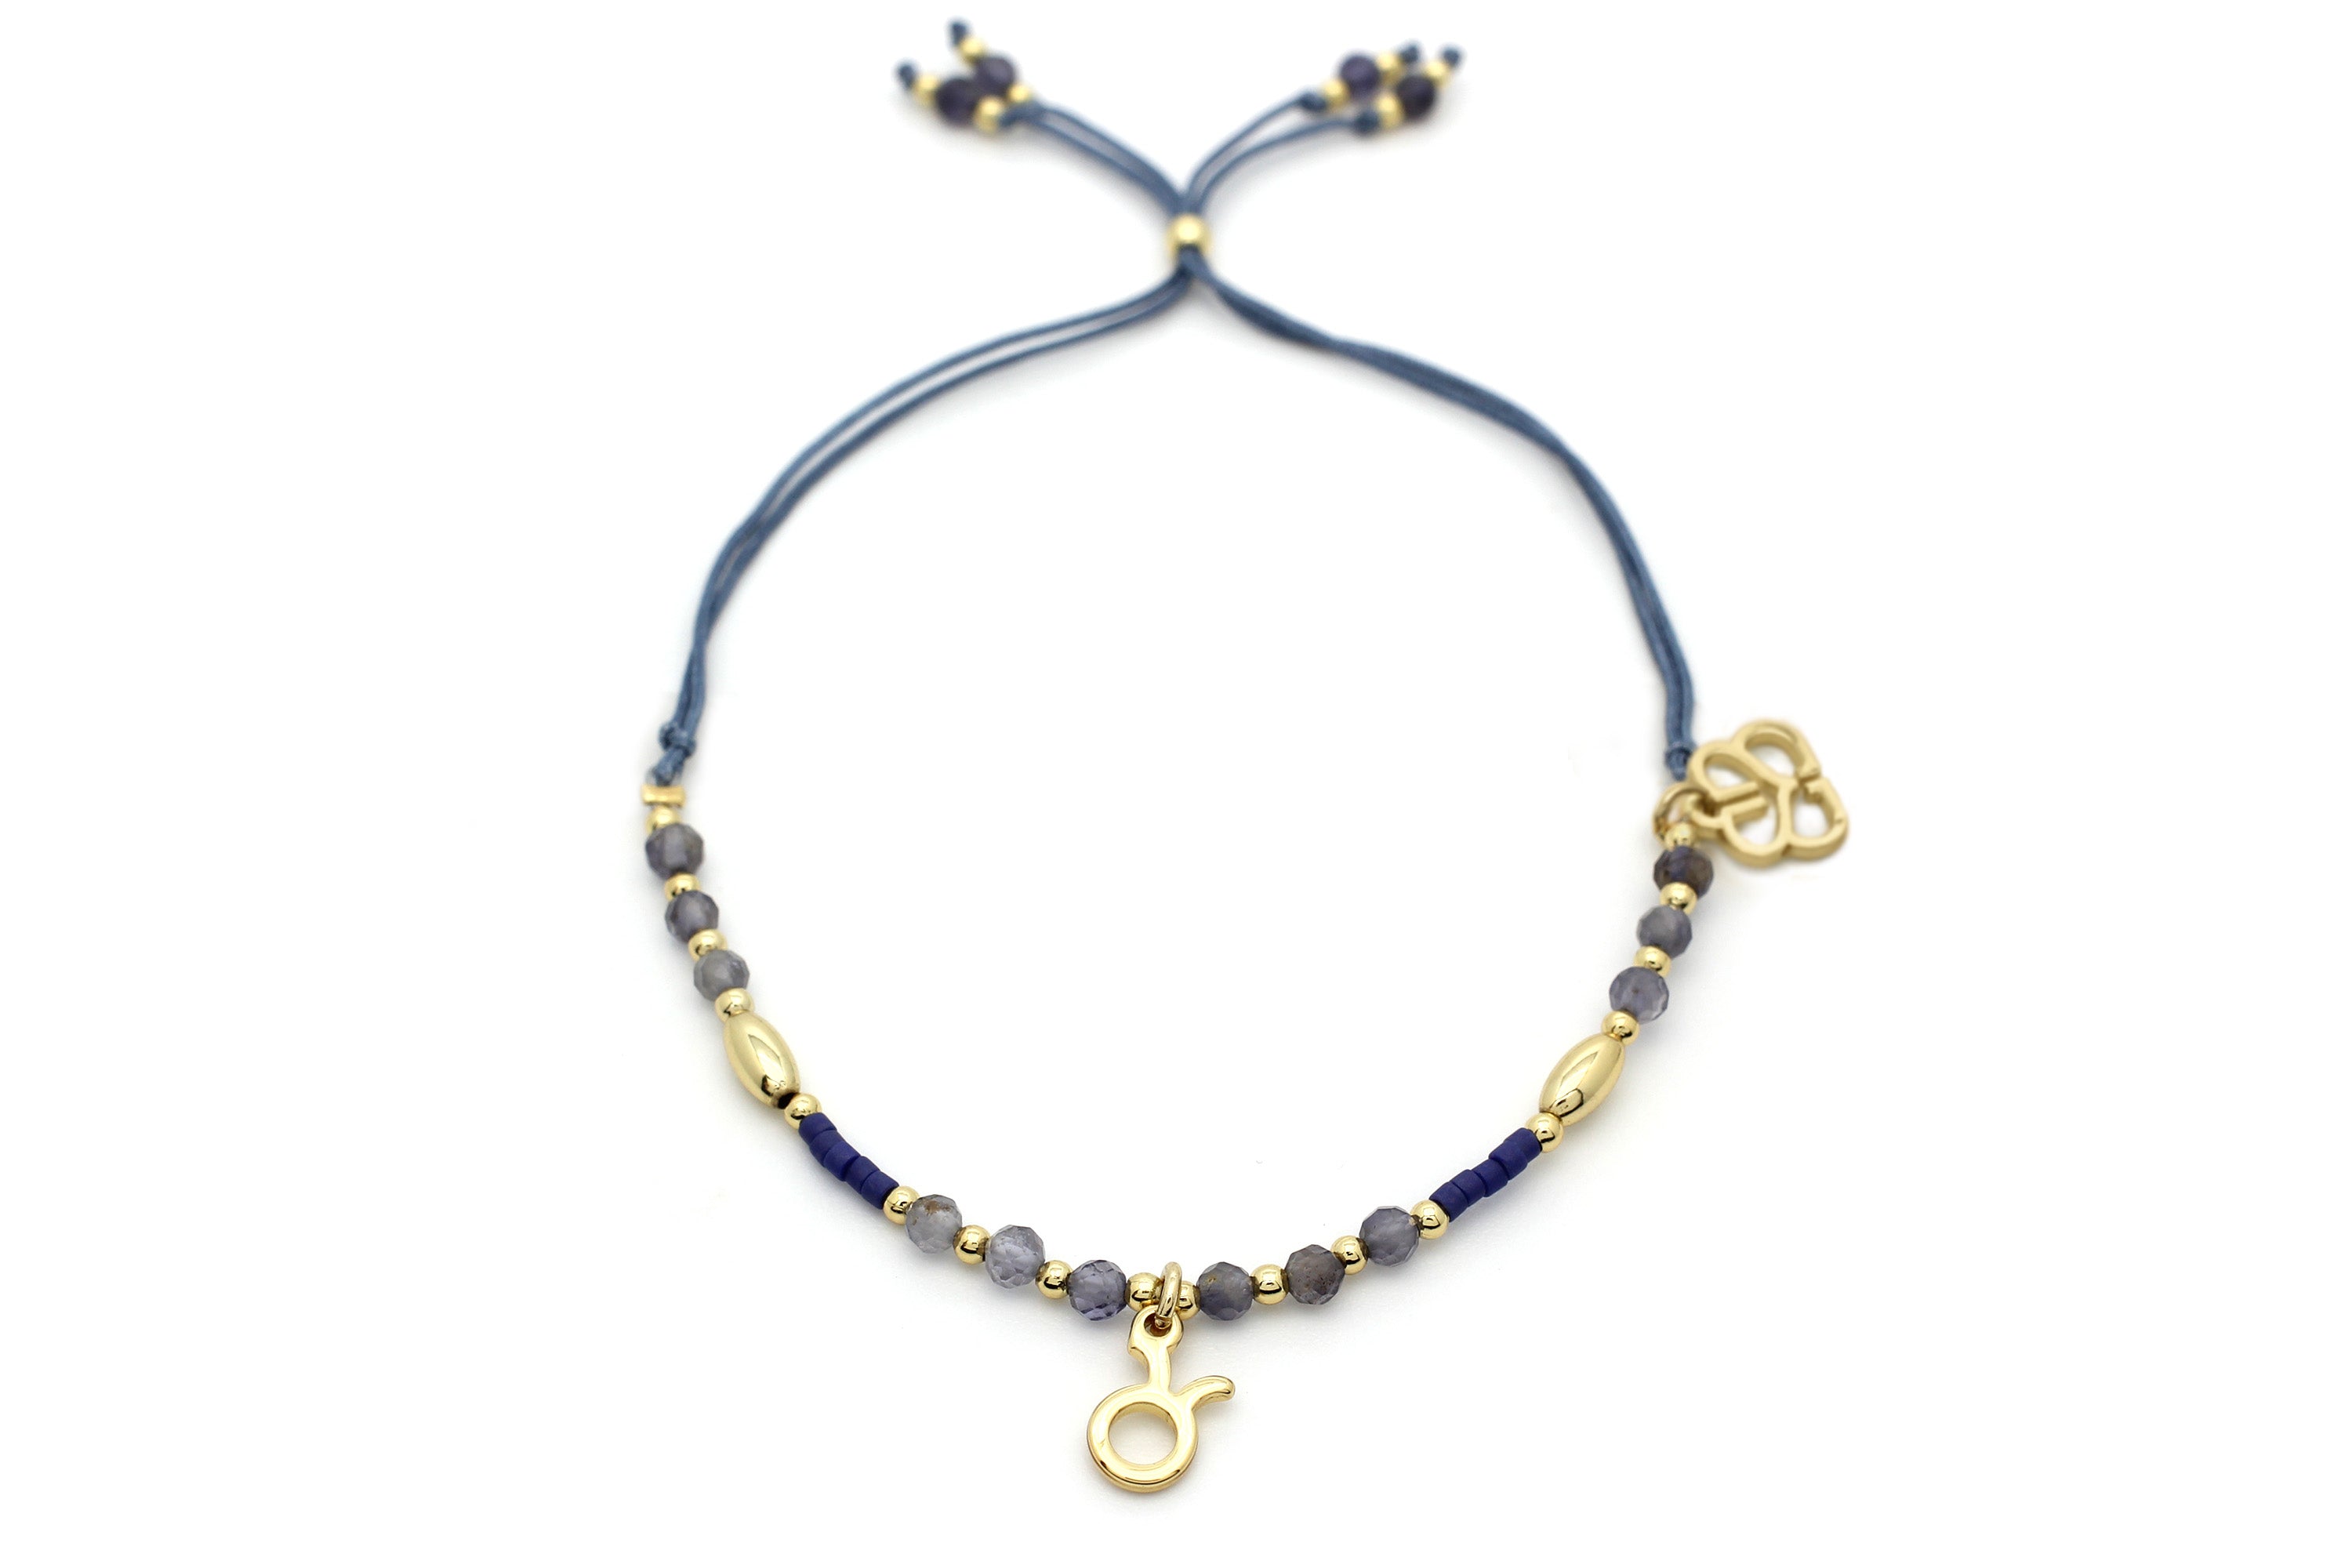 Taurus Zodiac Gemstone Gold Bracelet - Boho Betty